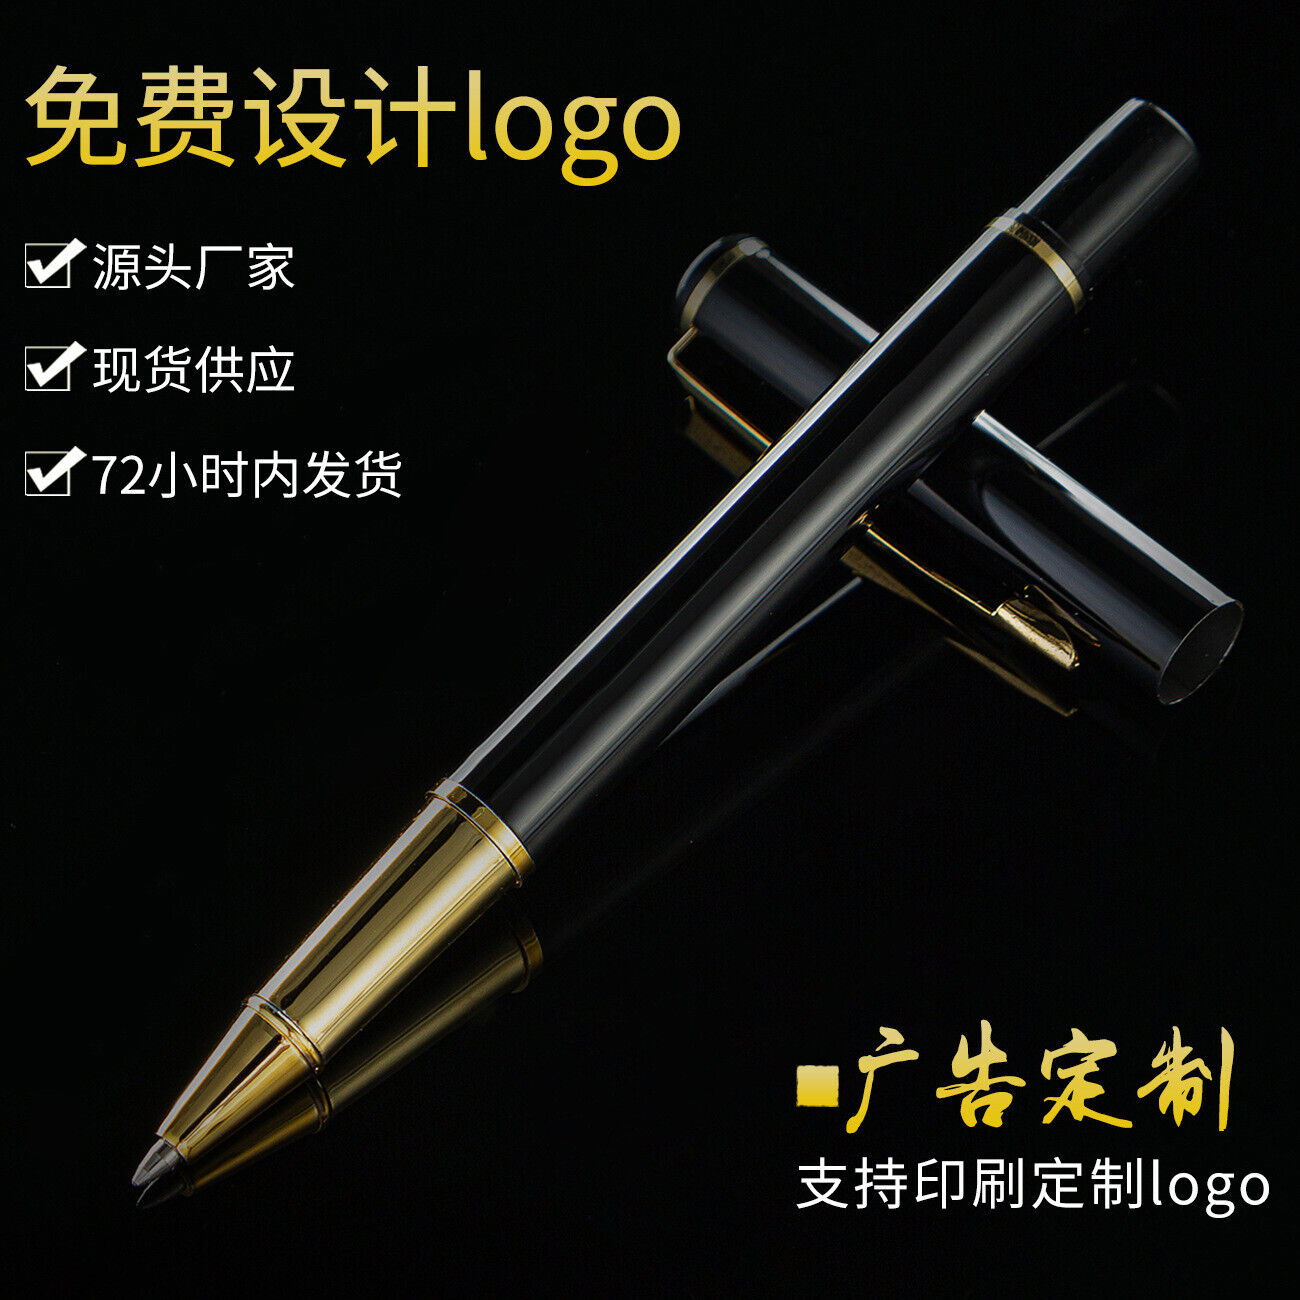 30PCS metal signature pen stock 1 black gift pen business neutral pen printable